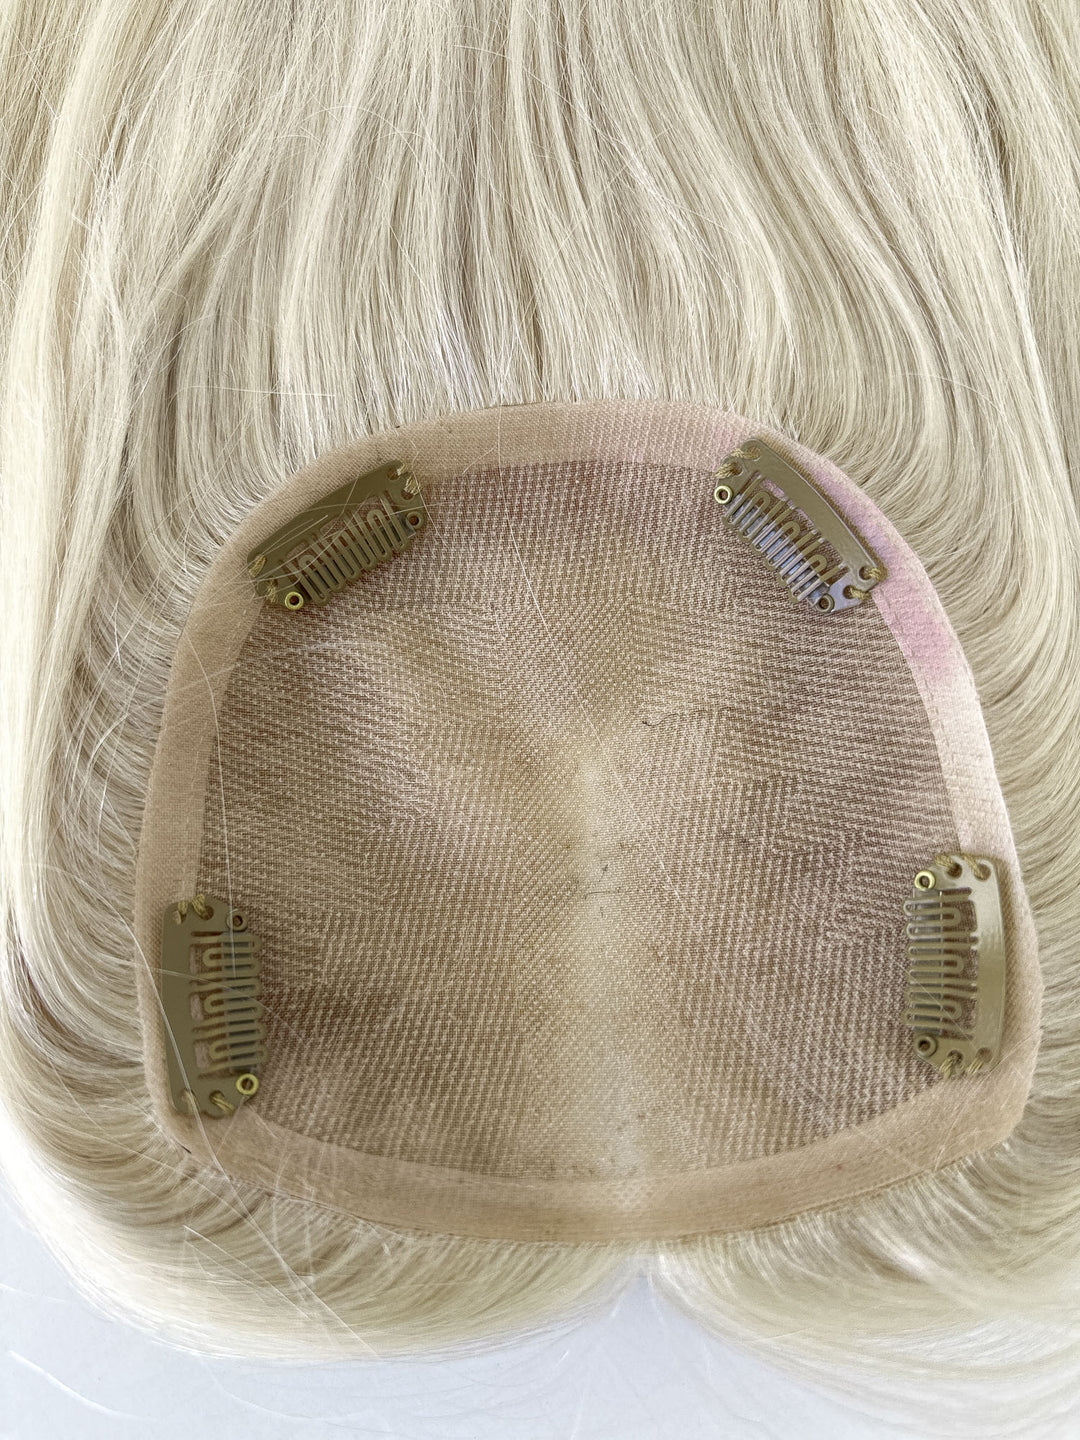 Blonde Hair Topper|Hair Toppers for Women | Platinum Blonde #60